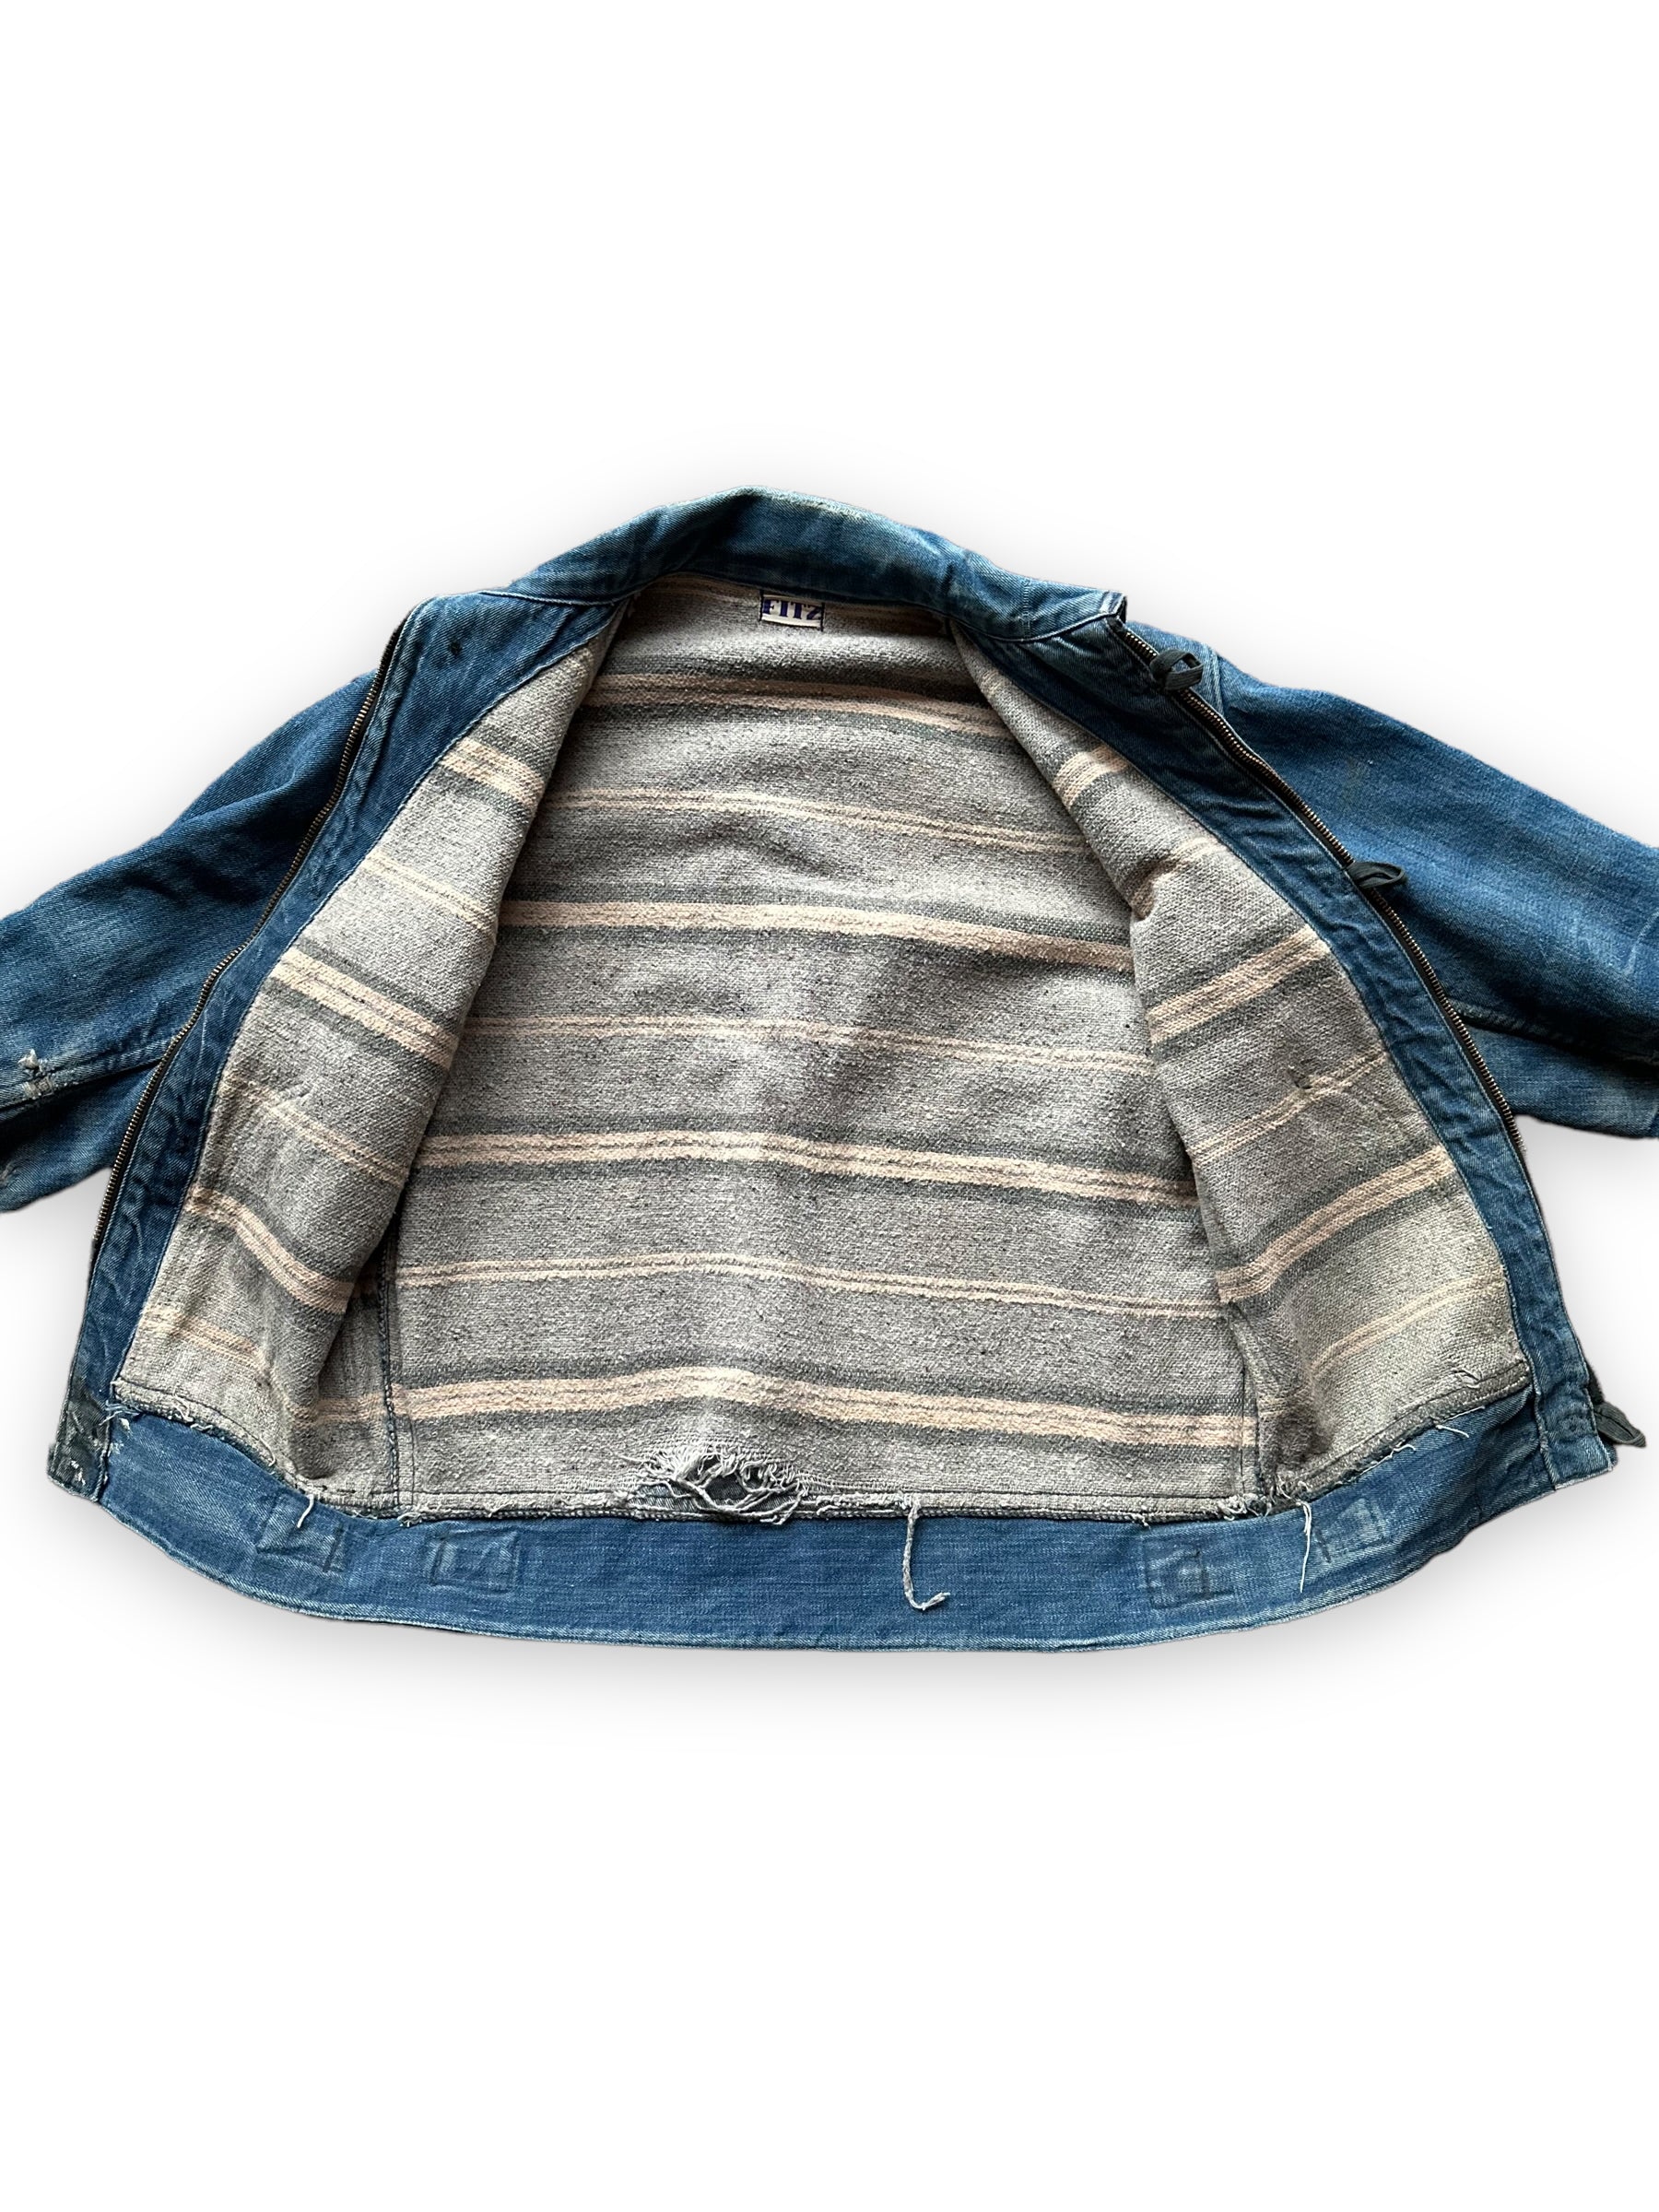 Blanket Lining on Vintage Blanket Lined Fitz Denim Jacket | Seattle Vintage Workwear Clothing | Barn Owl Vintage